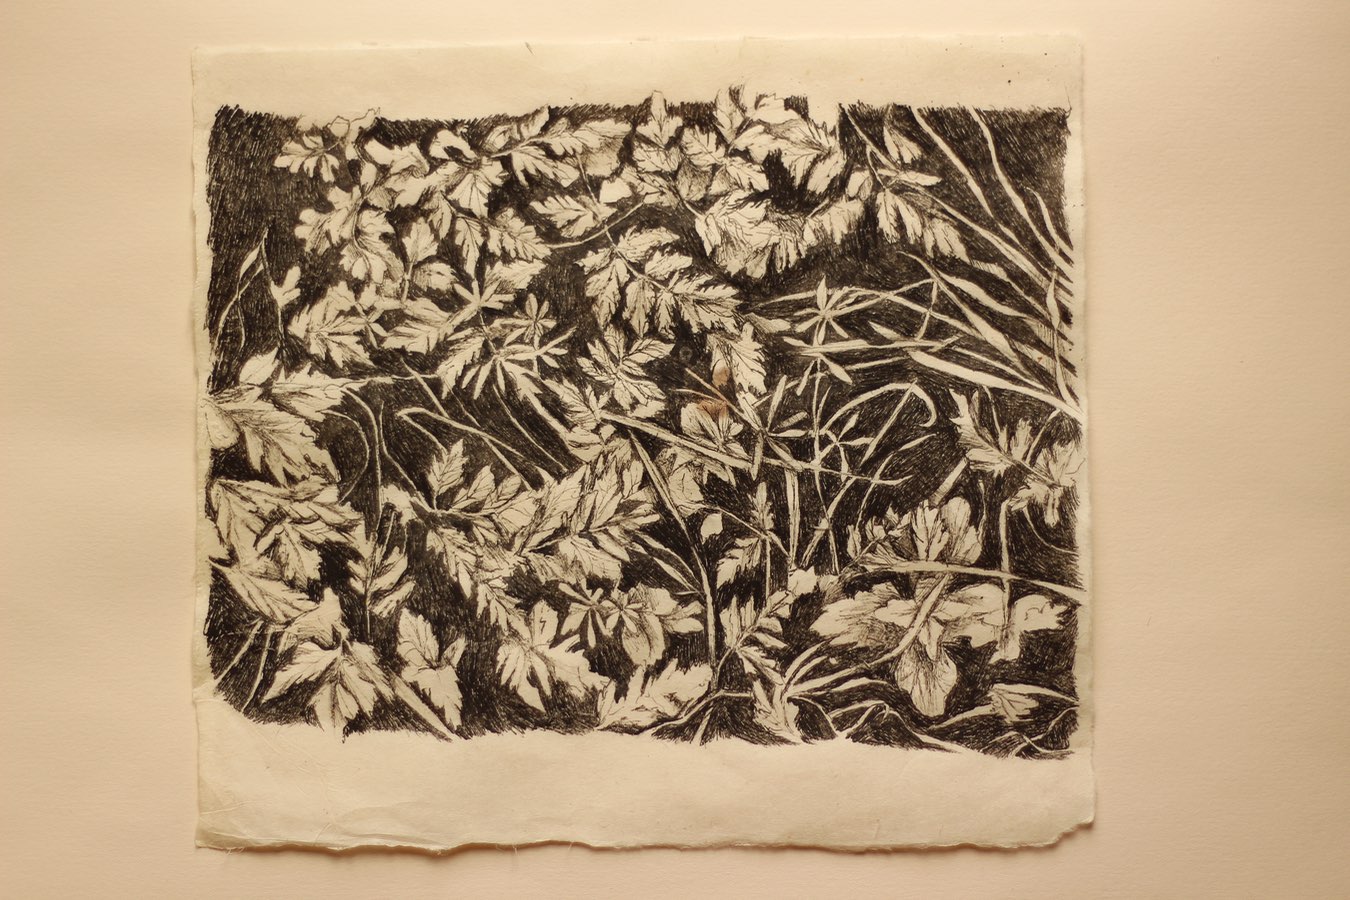  ‘Footpath, Foliage’, Indian ink on Lokta paper, 28x25cm, April 2021